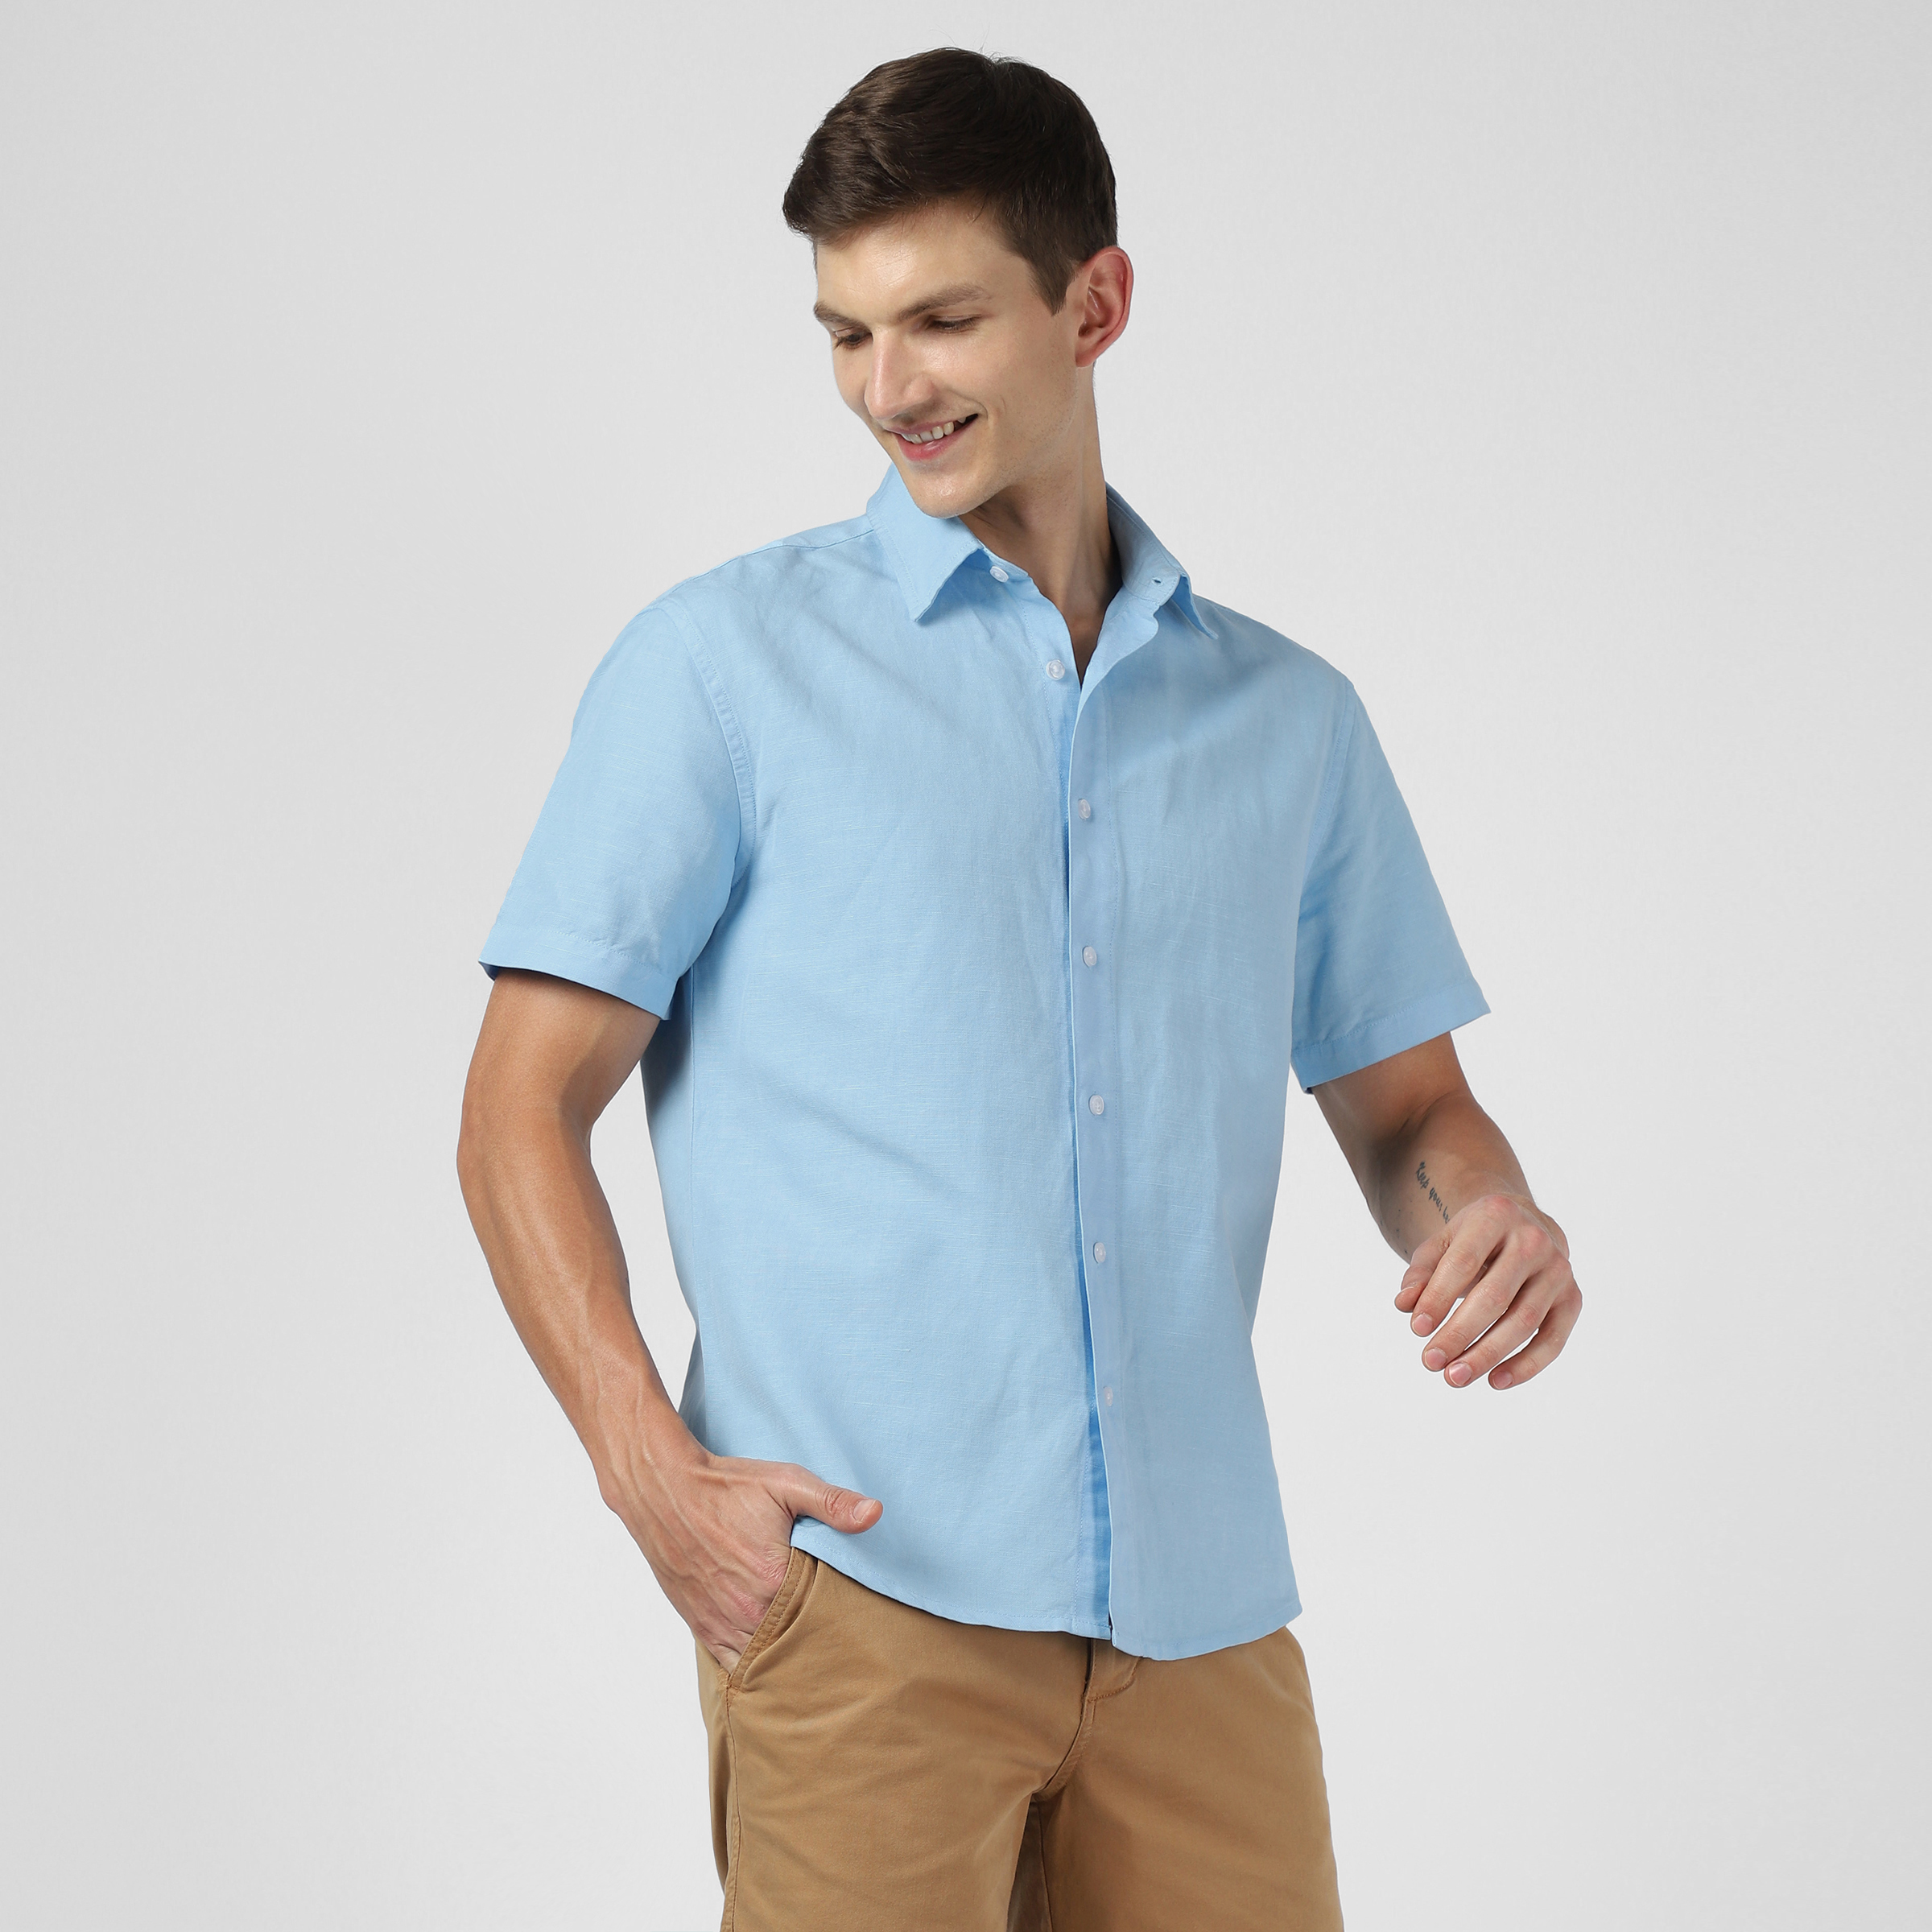 Retreat Linen Shirt Cool Blue side on model